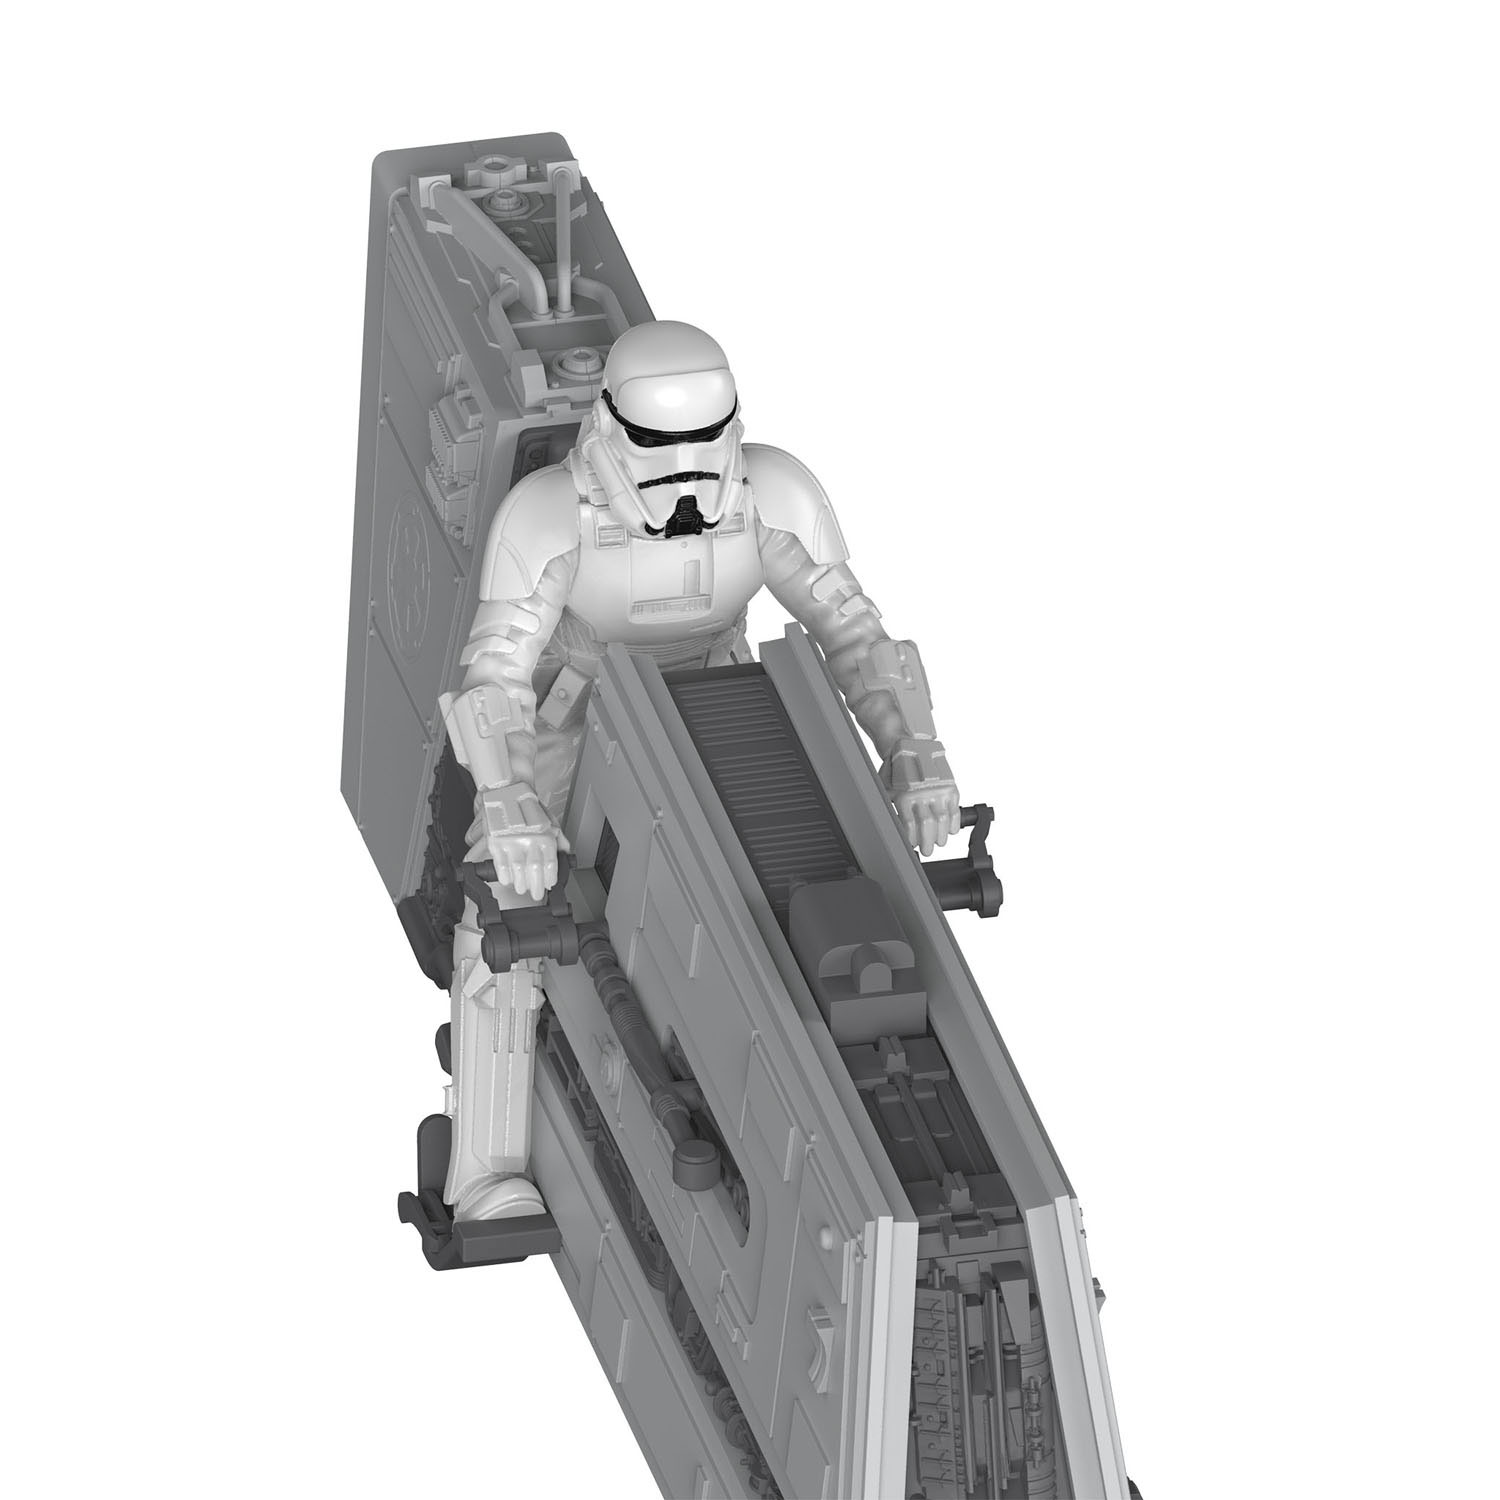 Revell Star Wars Han Solo Imperial Patrol Speeder